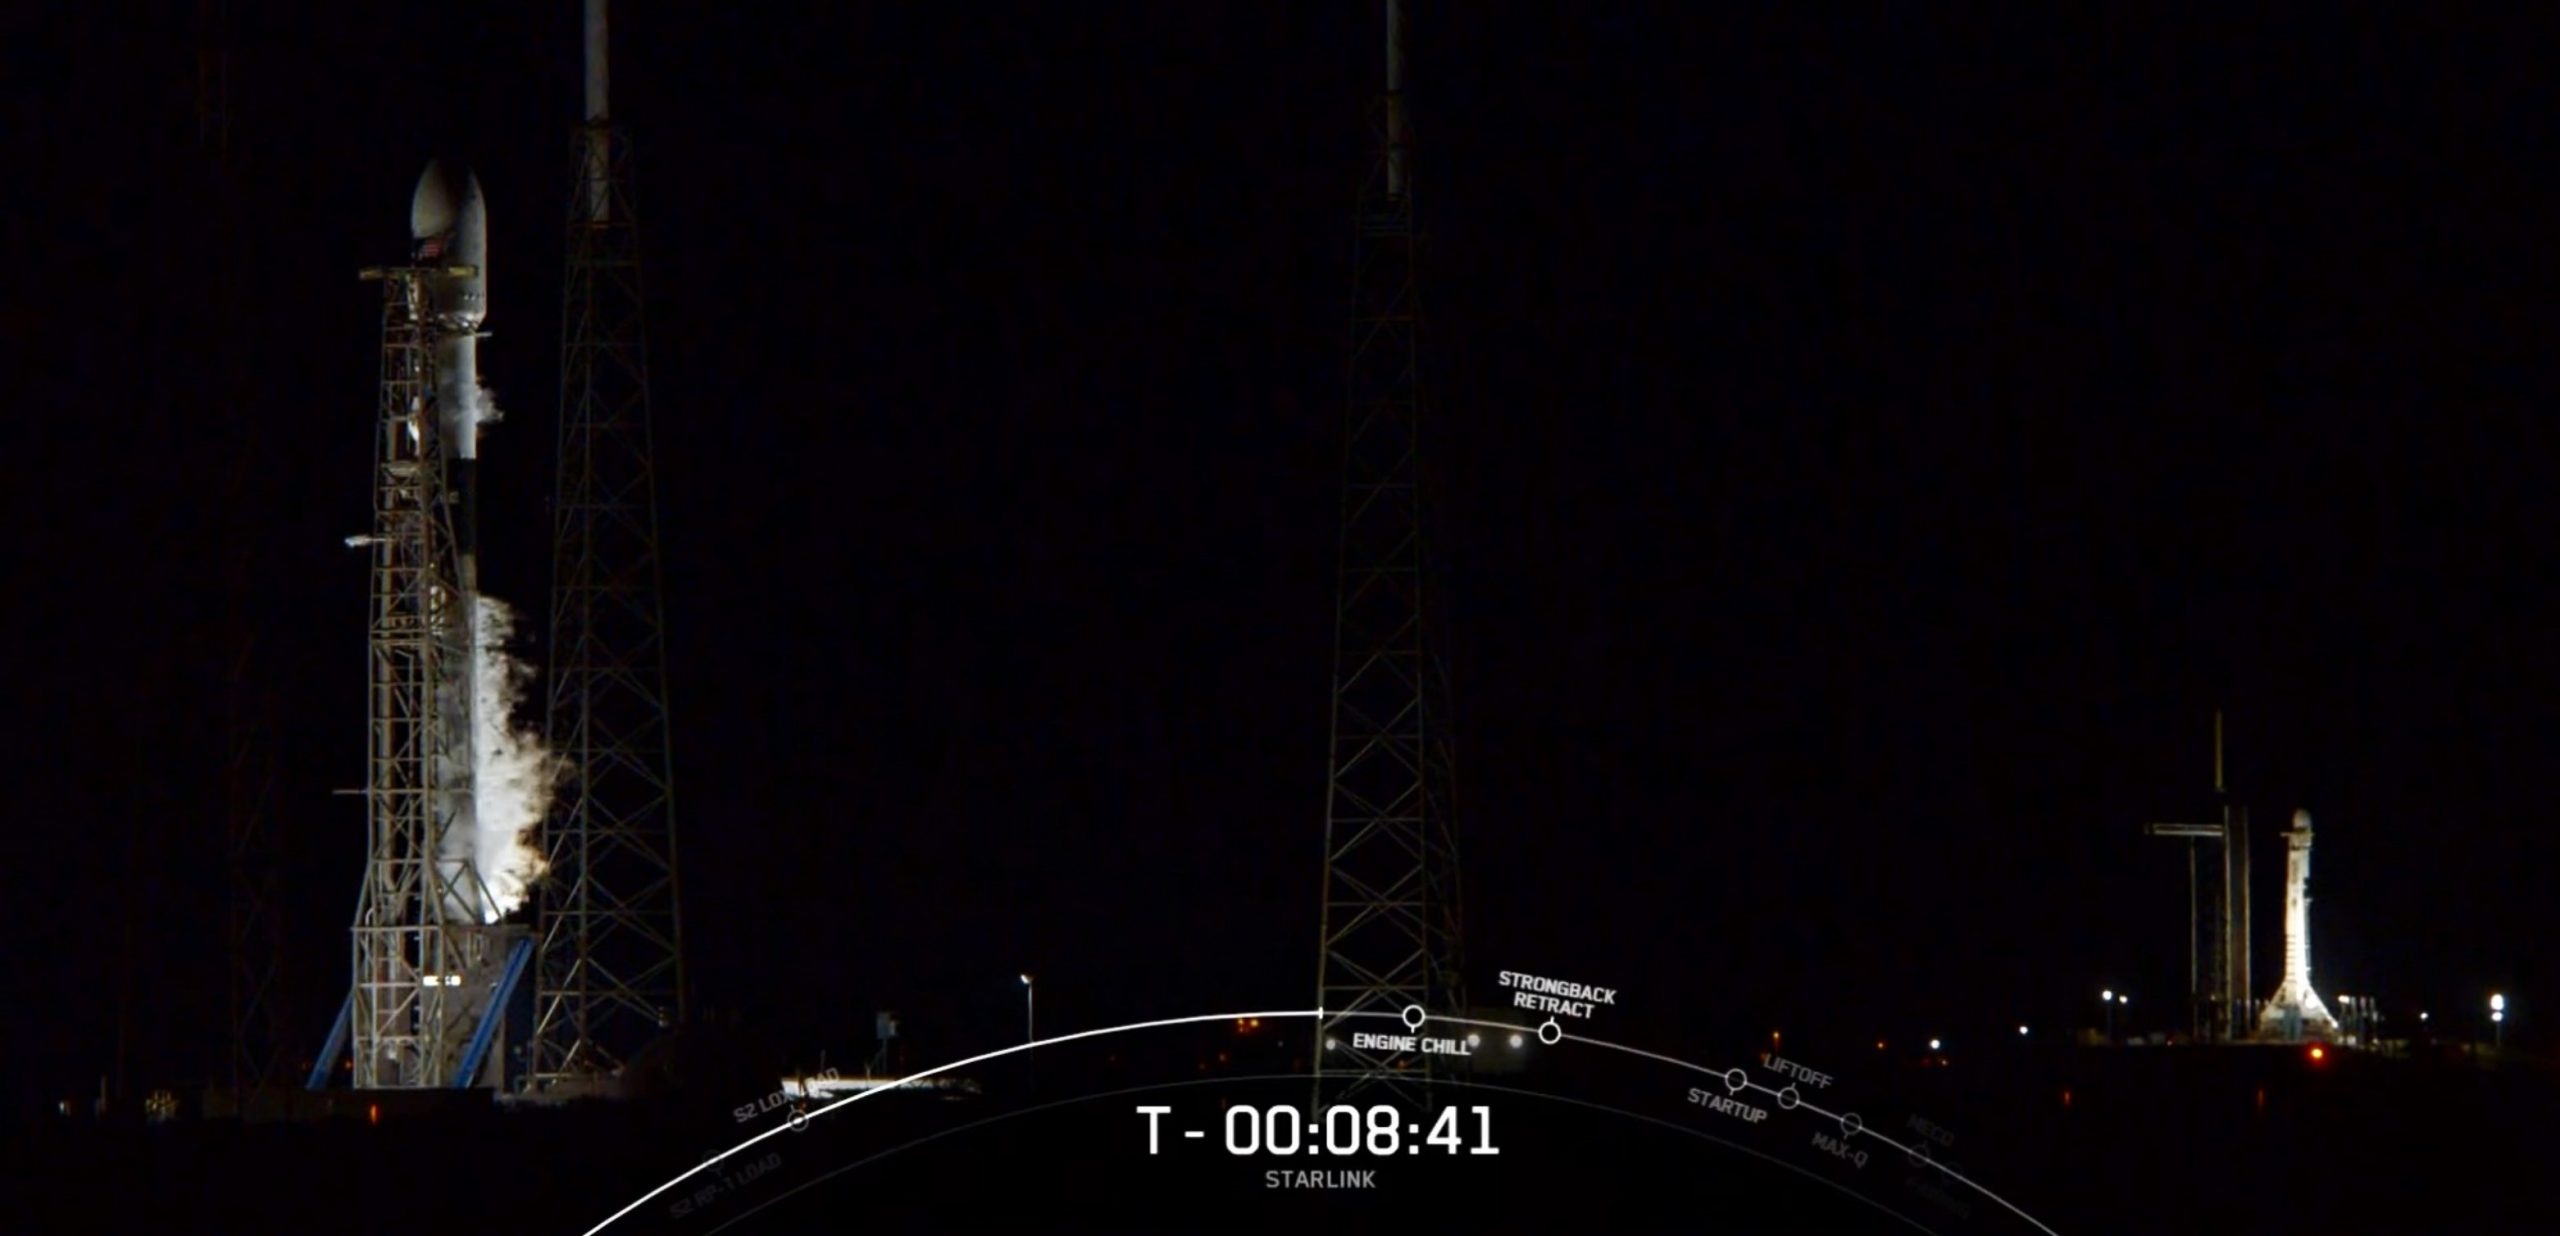 Starlink-18 Falcon 9 B1060 020421 (SpaceX) webcast 1 crop